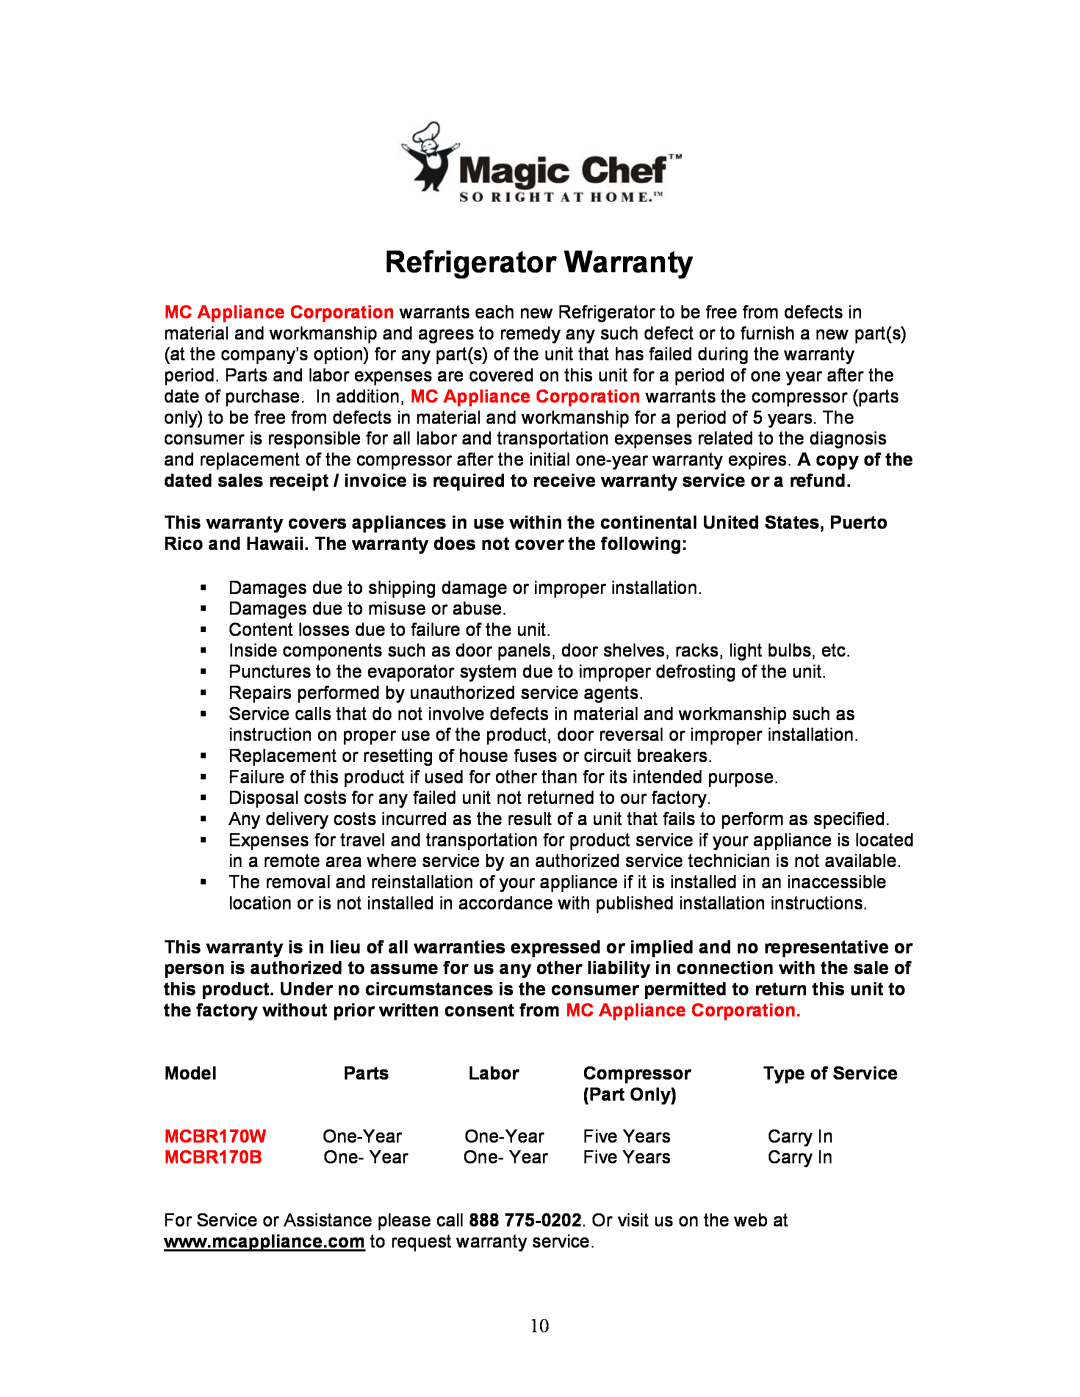 Magic Chef MCBR170B instruction manual Refrigerator Warranty, Model, Parts, Labor, Compressor, Part Only, MCBR170W 